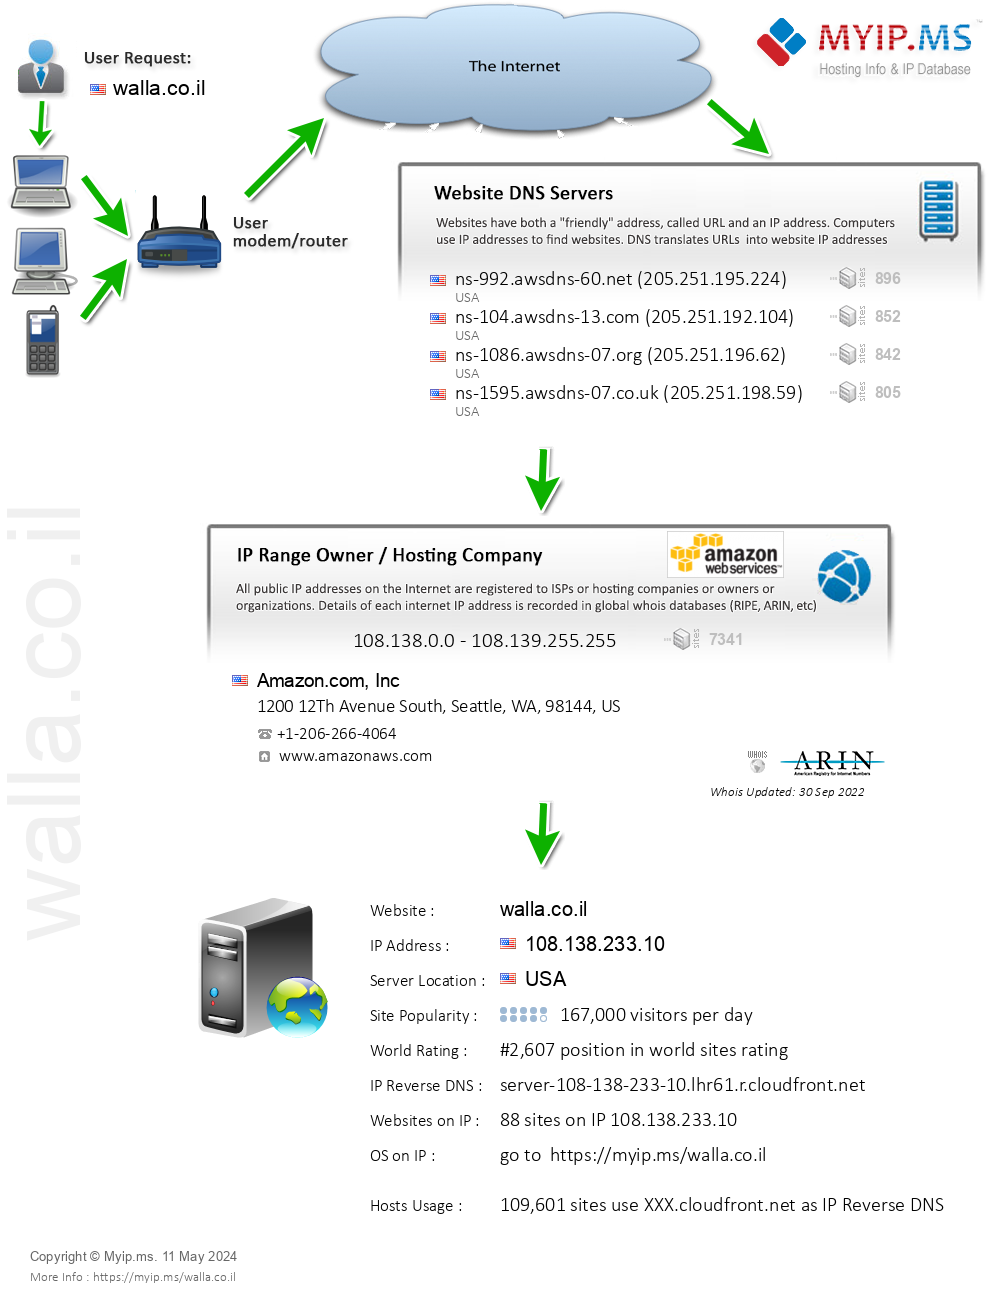 Walla.co.il - Website Hosting Visual IP Diagram